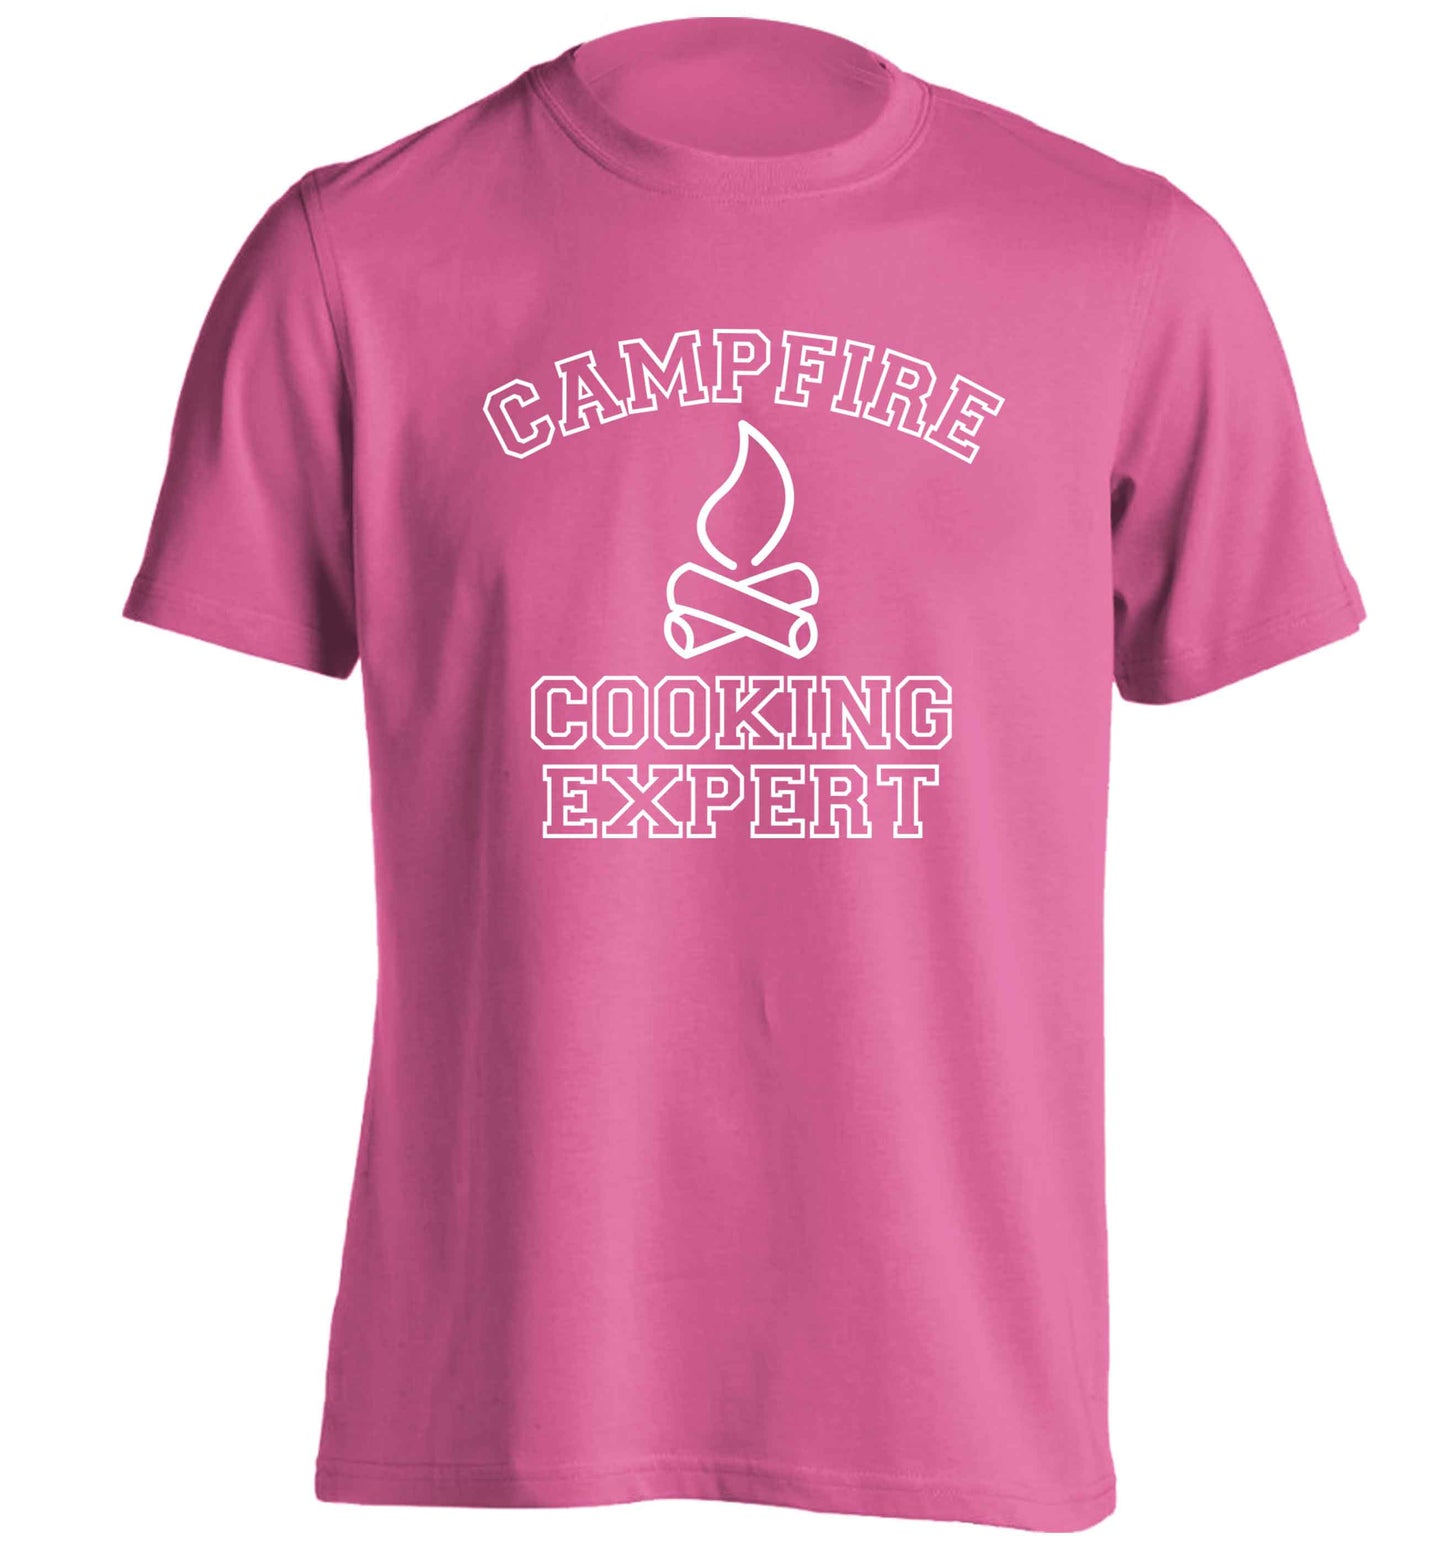 Campfire cooking expert adults unisex pink Tshirt 2XL